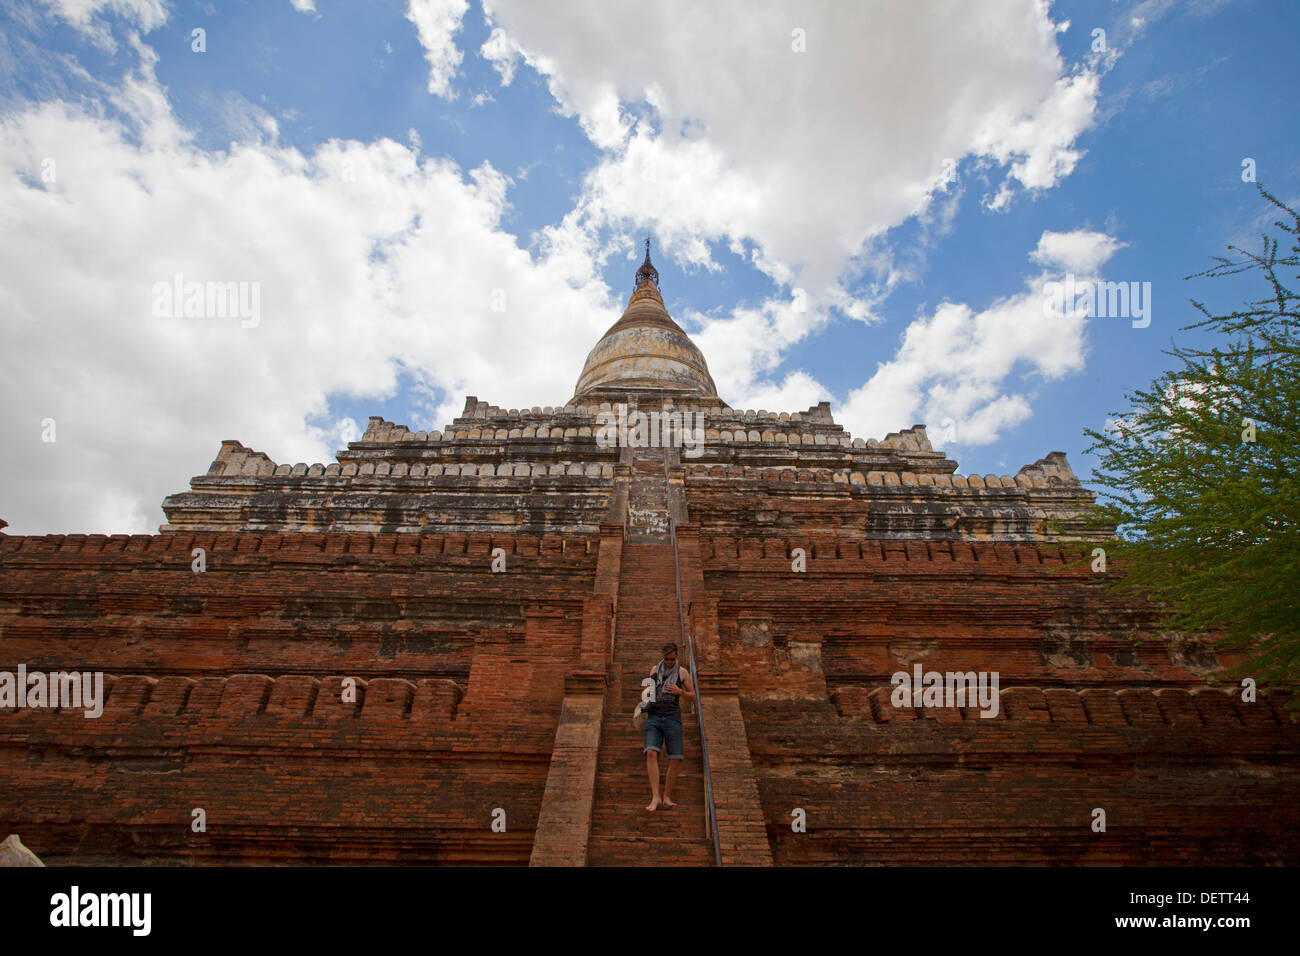 A man walks down a temple in Bagan, Burma. Stock Photo